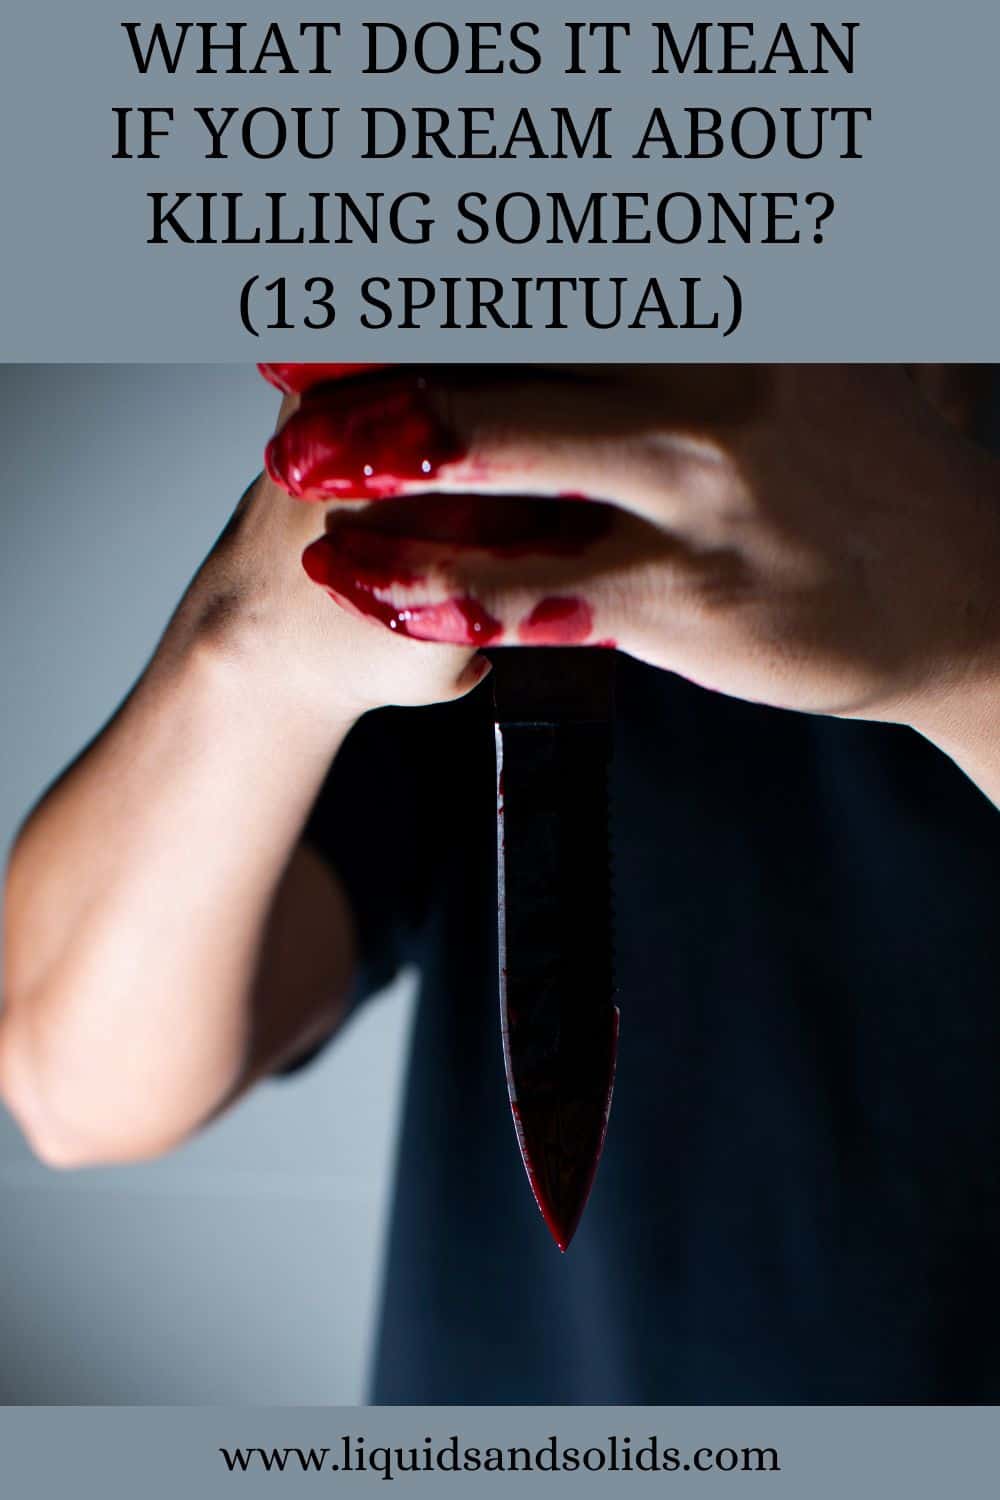  Rêver de tuer quelqu'un (13 significations spirituelles)